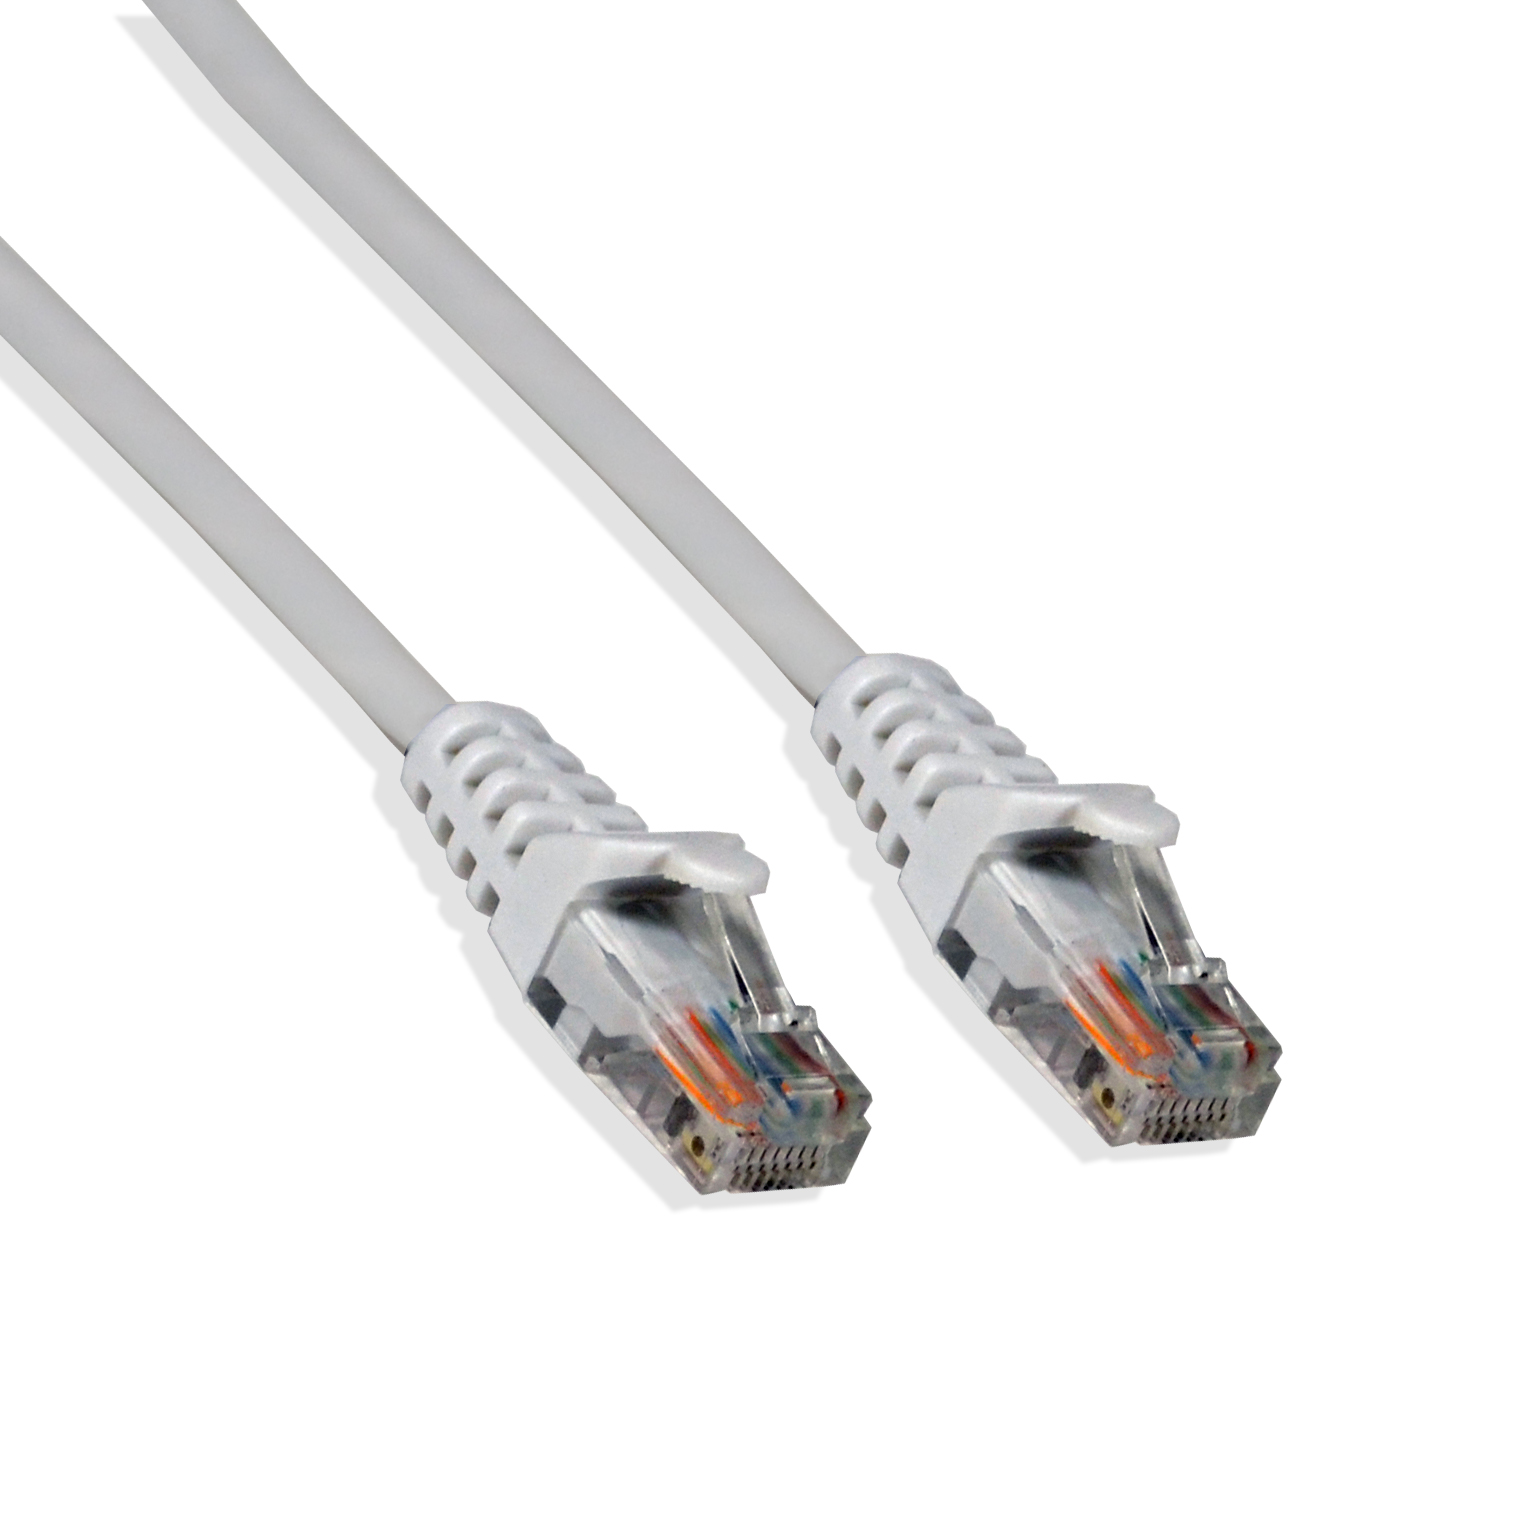 Lan cable 5e. Кабель Ethernet Cat 5e. Ethernet кабель UTP 5e. Double rj45 cat6 UTP White, арт LG 774247. Avaya Cat 5e Ethernet Cable 9ft/3m.